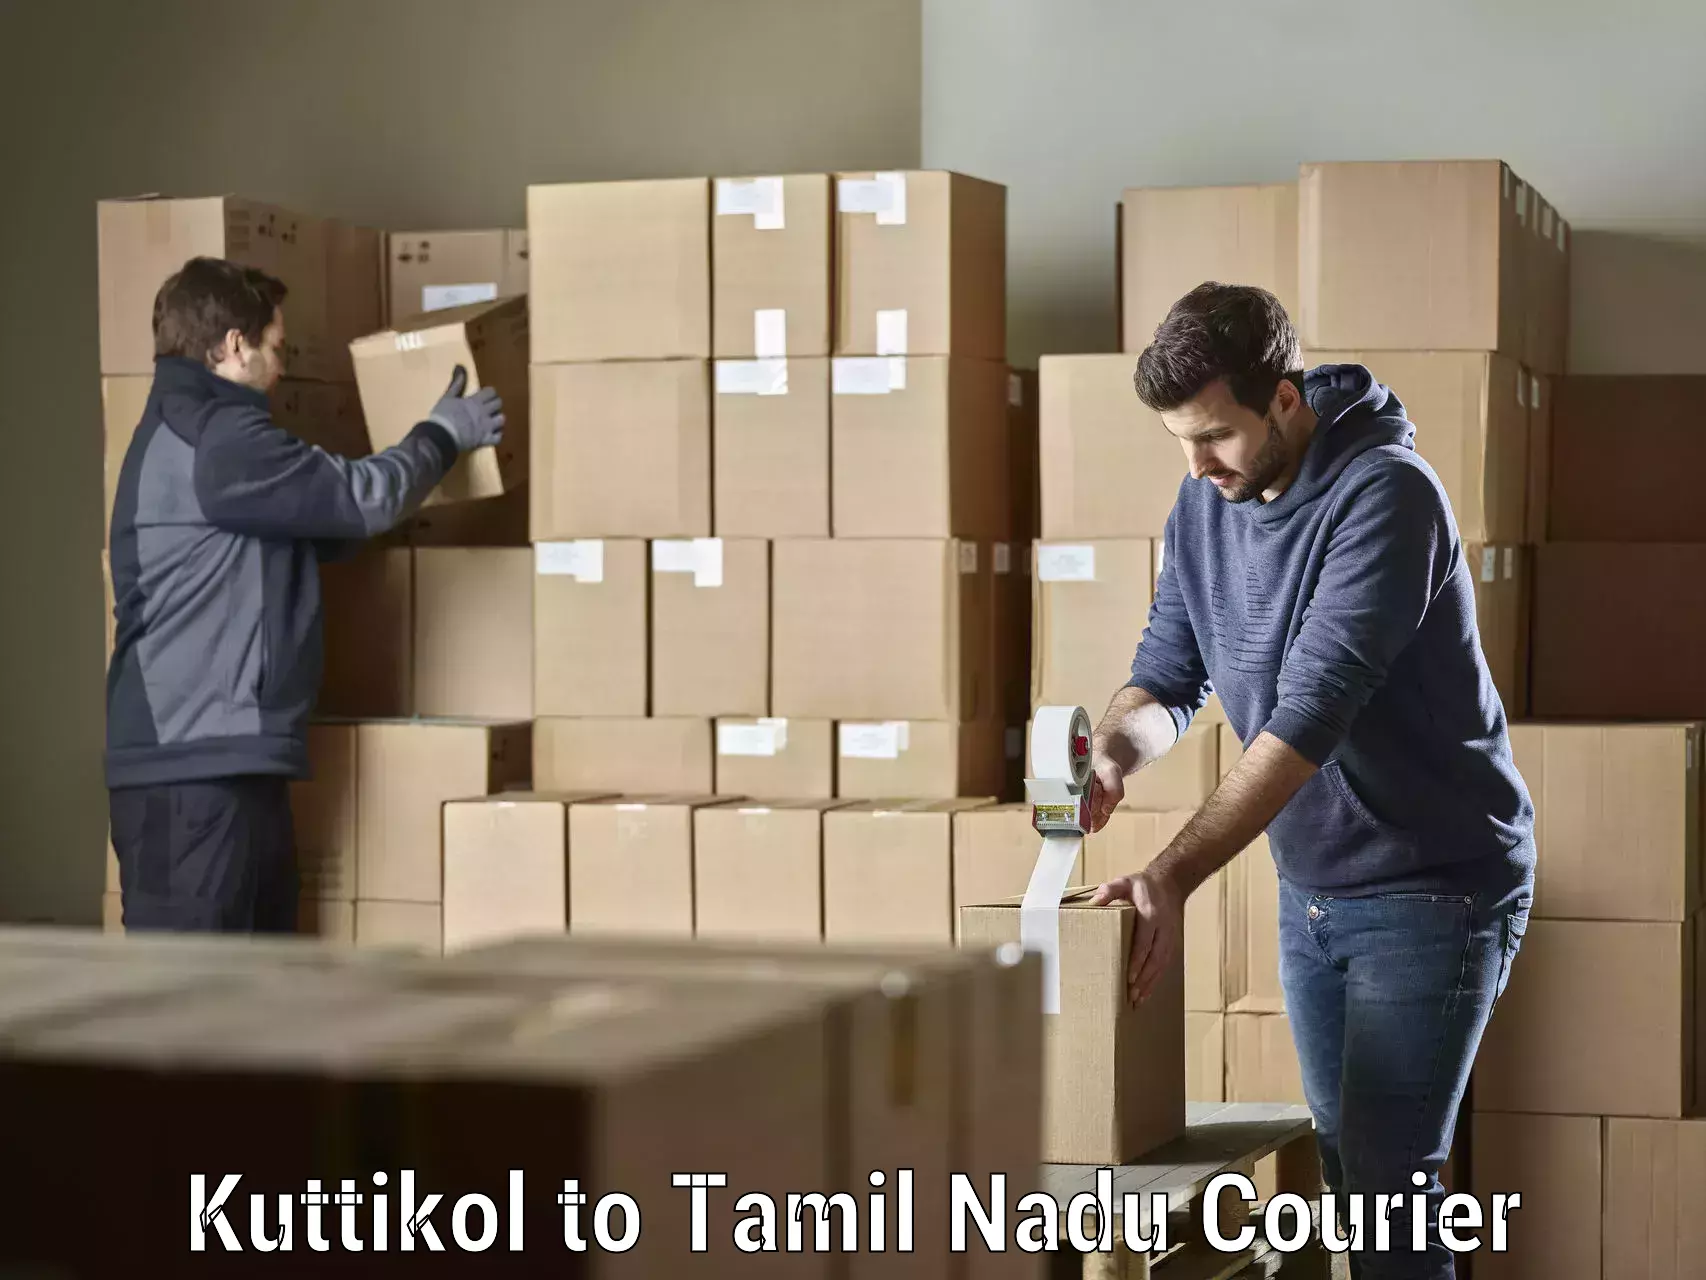 Reliable delivery network Kuttikol to Villupuram